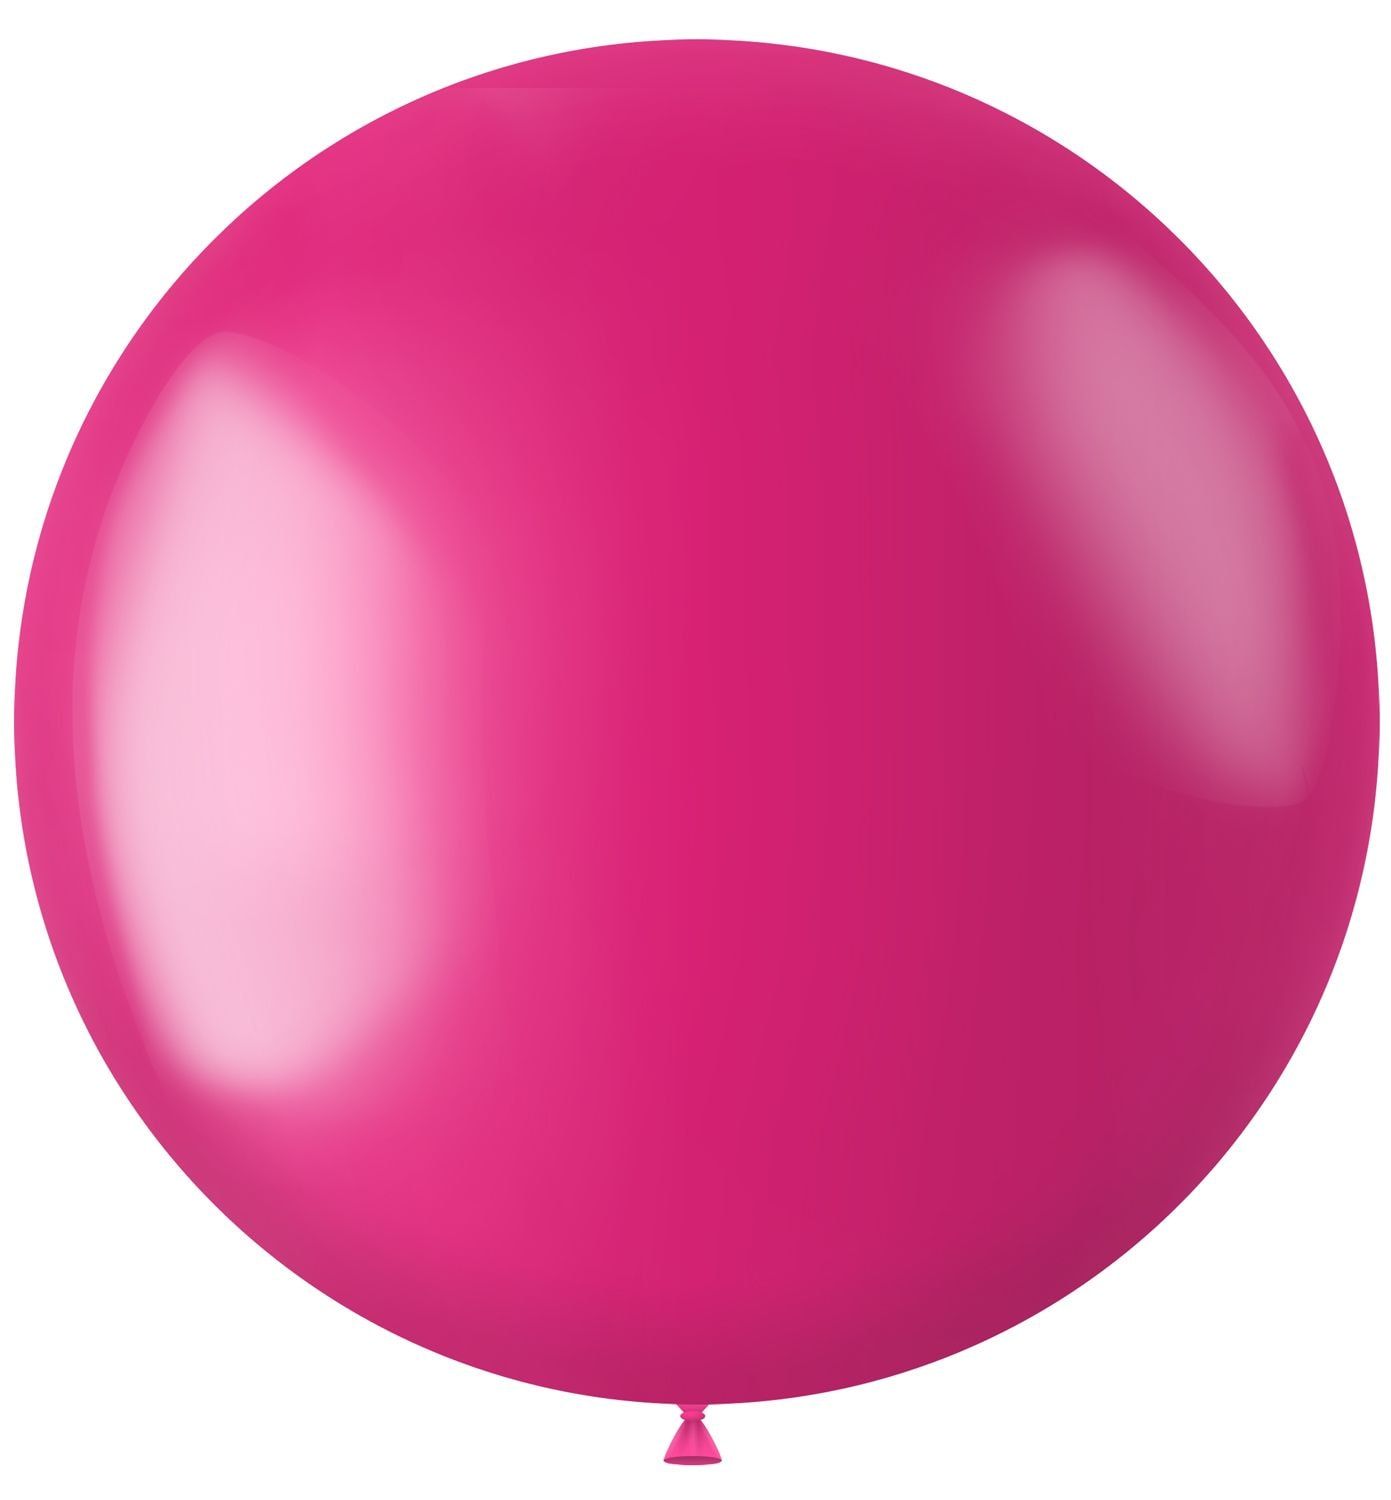 XL ballon roze metallic